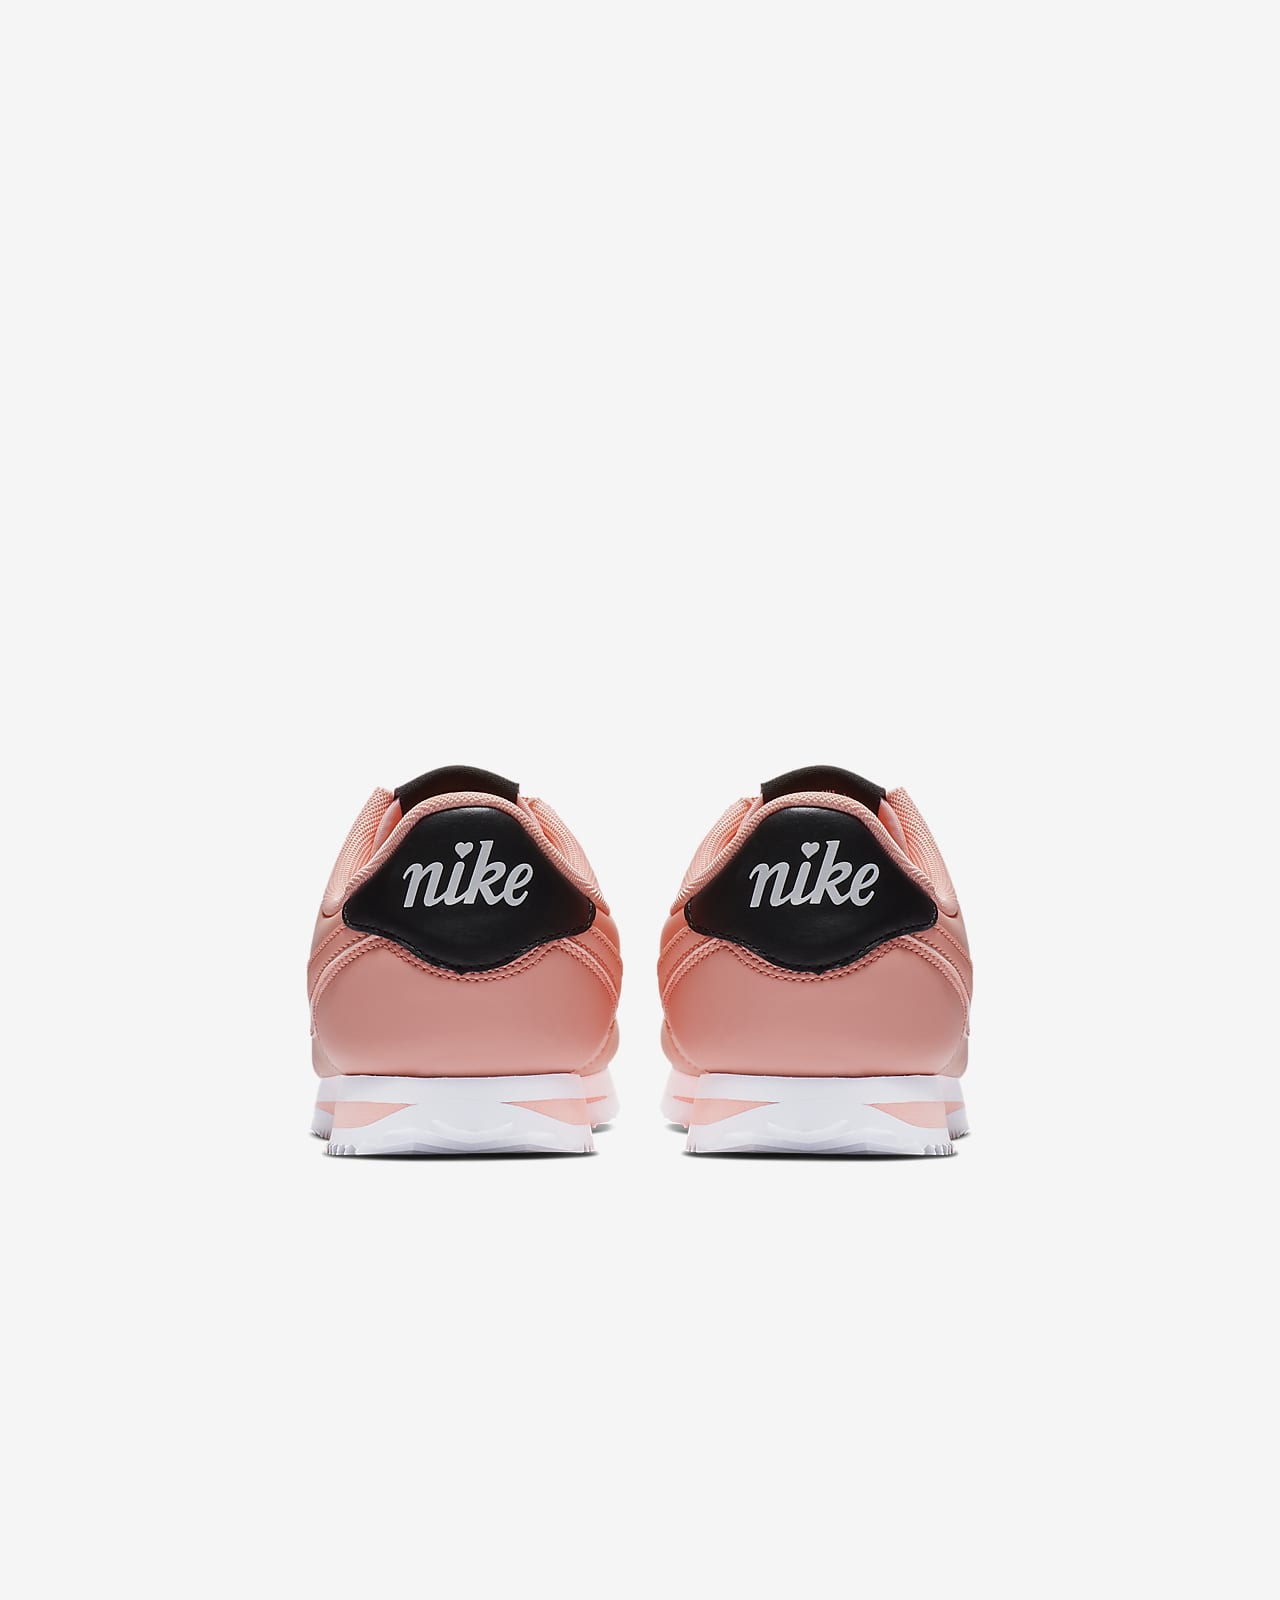 Nike Cortez Basic VDAY Older Kids' Shoe. SA